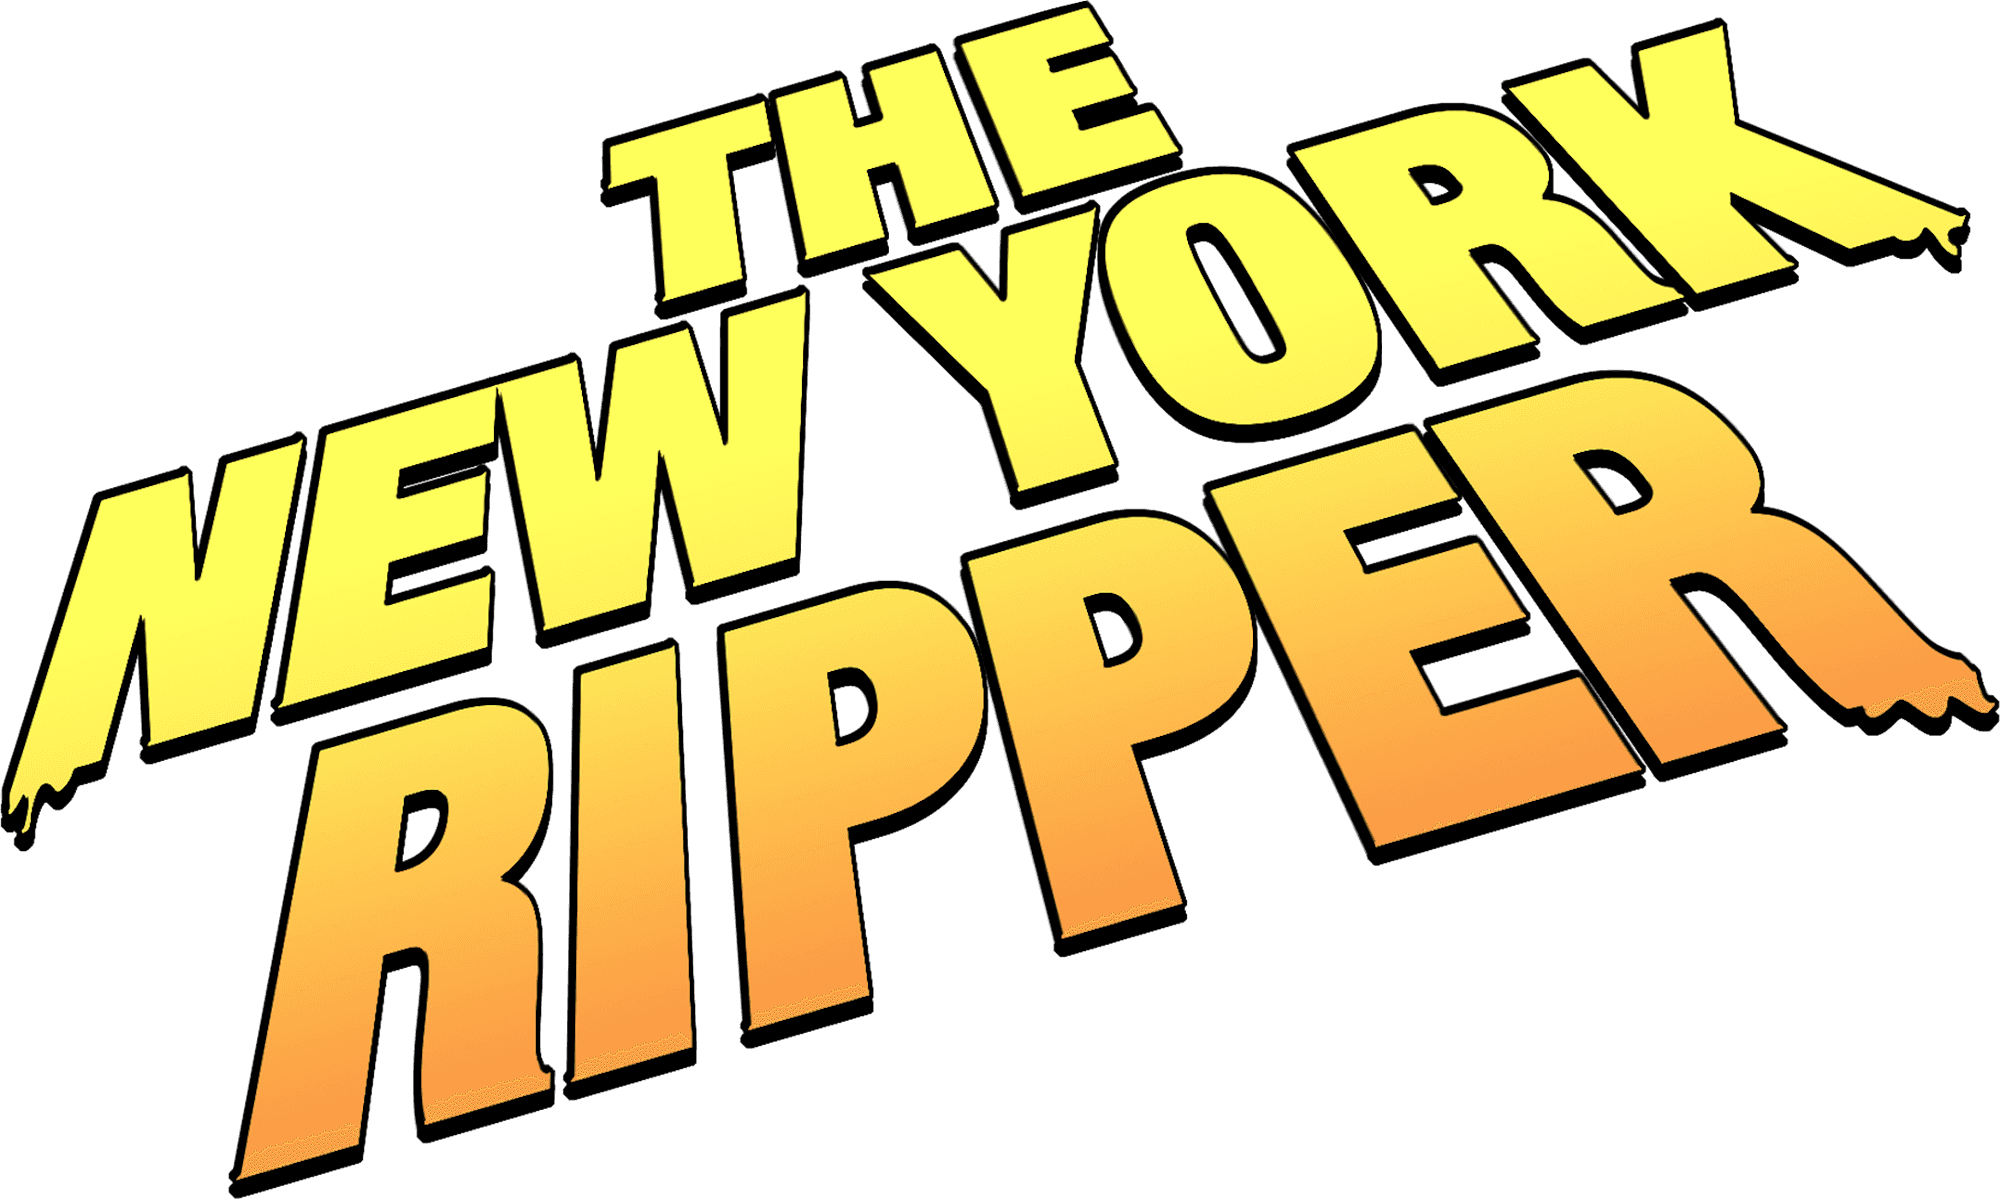 The New York Ripper logo